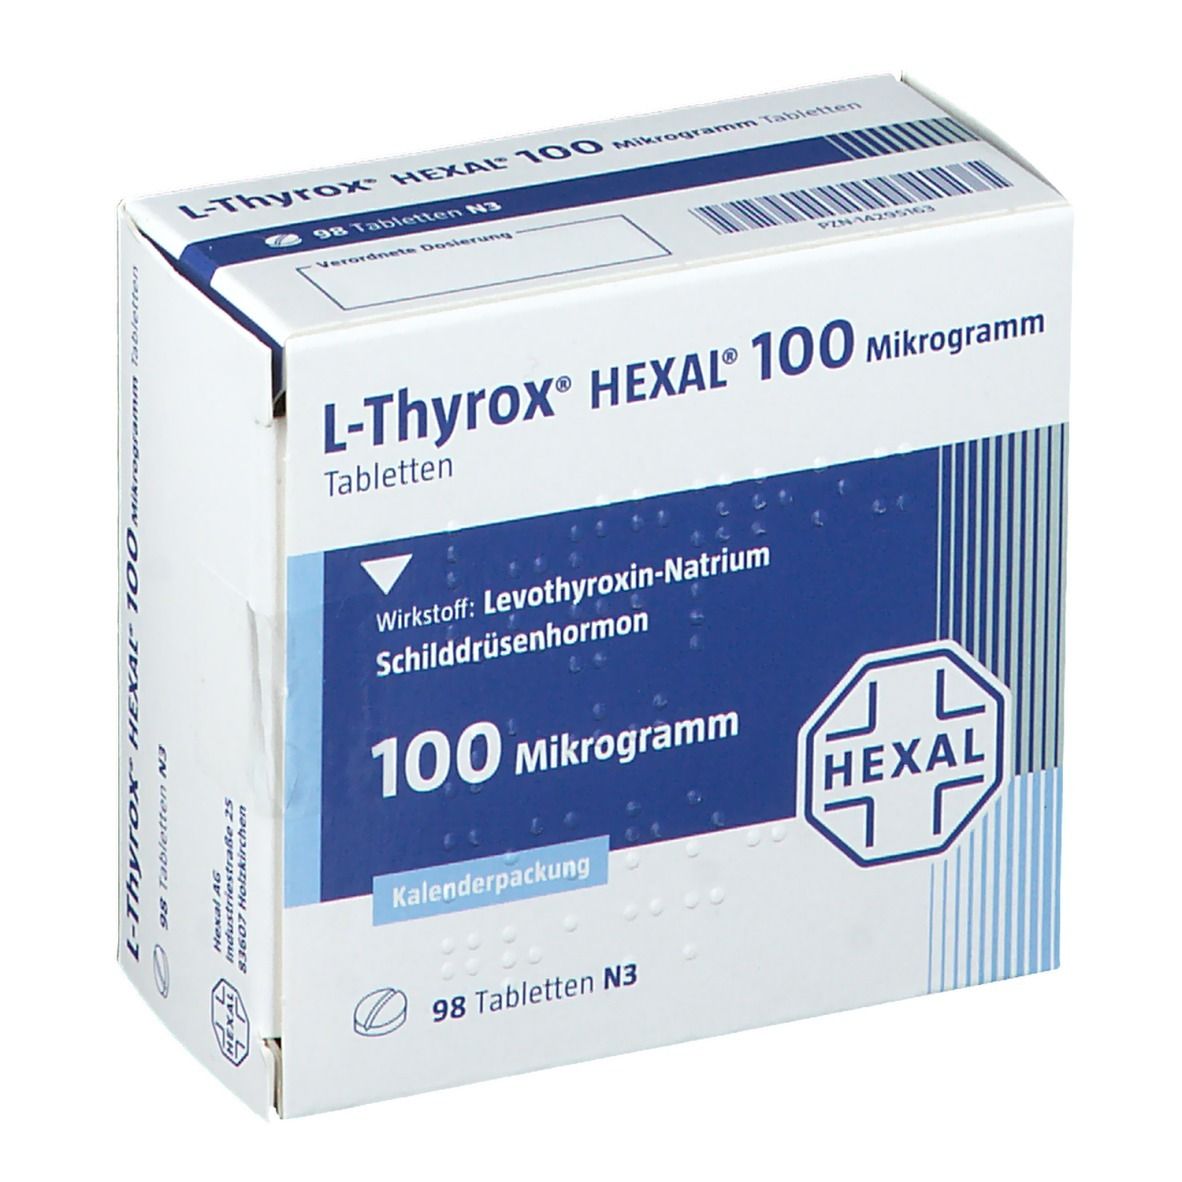 Сотой гексал. L-Thyrox Hexal 50. Гексал 100. L Thyrox Hexal 100 Германия. L Thyroxin 50 Европейский.